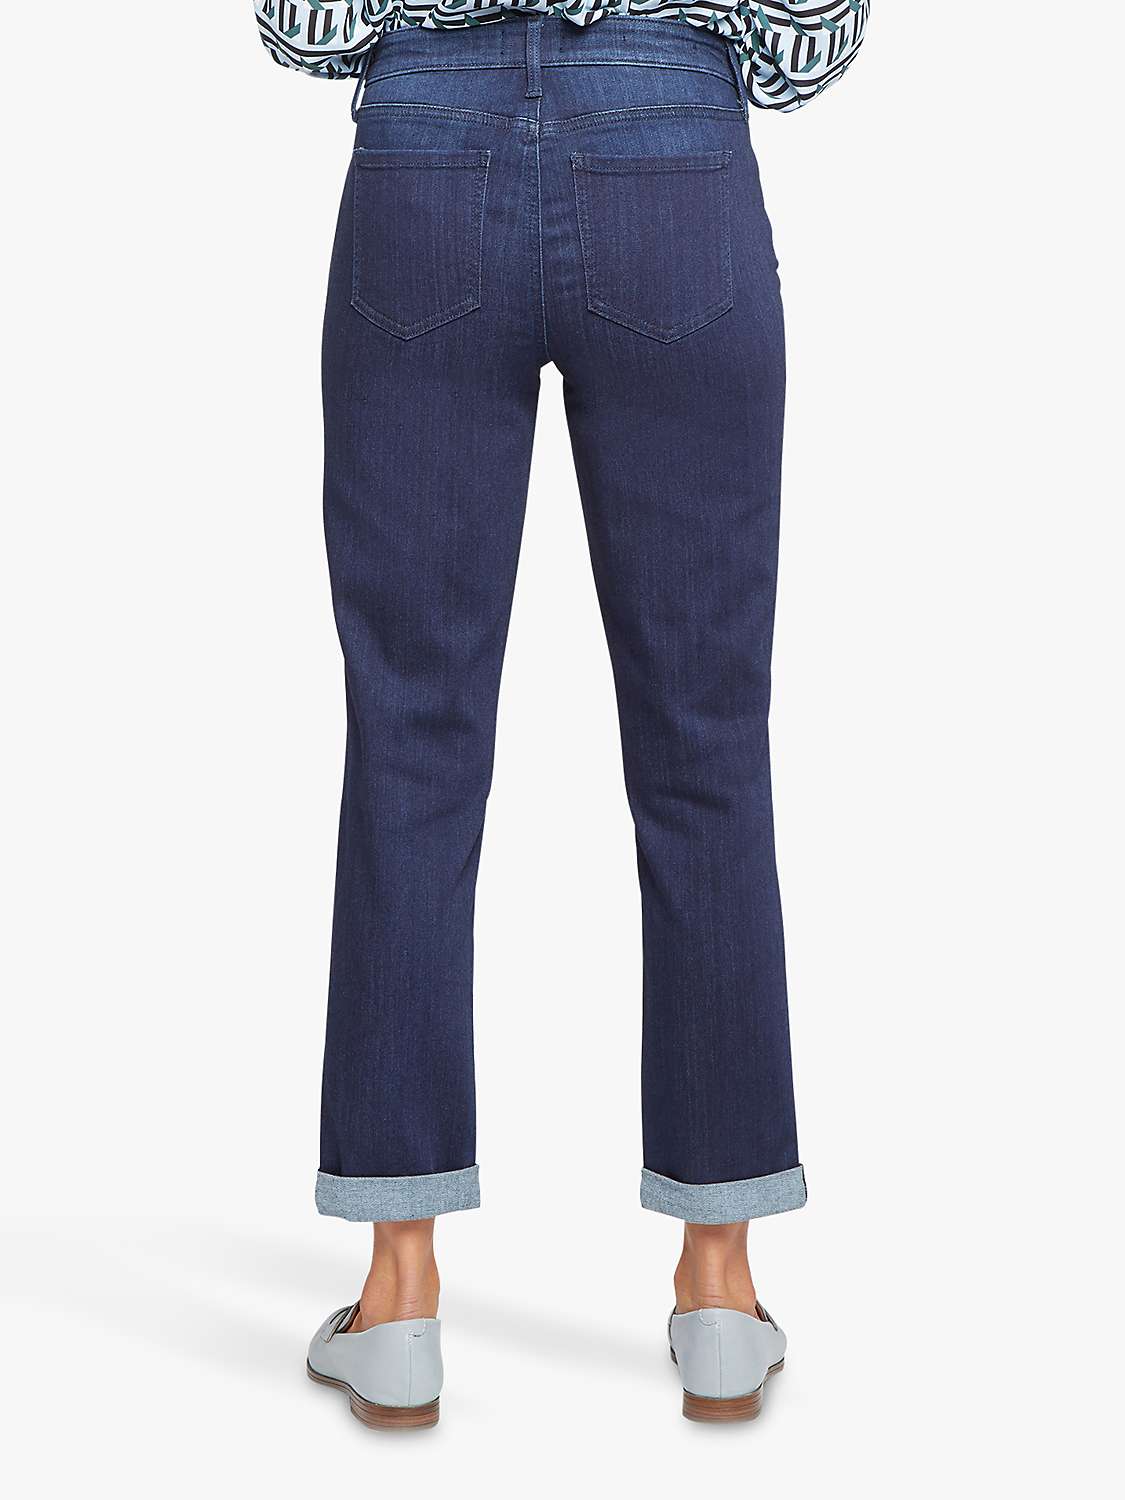 Buy NYDJ Margot Girlfriend Roll Cuff Jeans, Highway Online at johnlewis.com